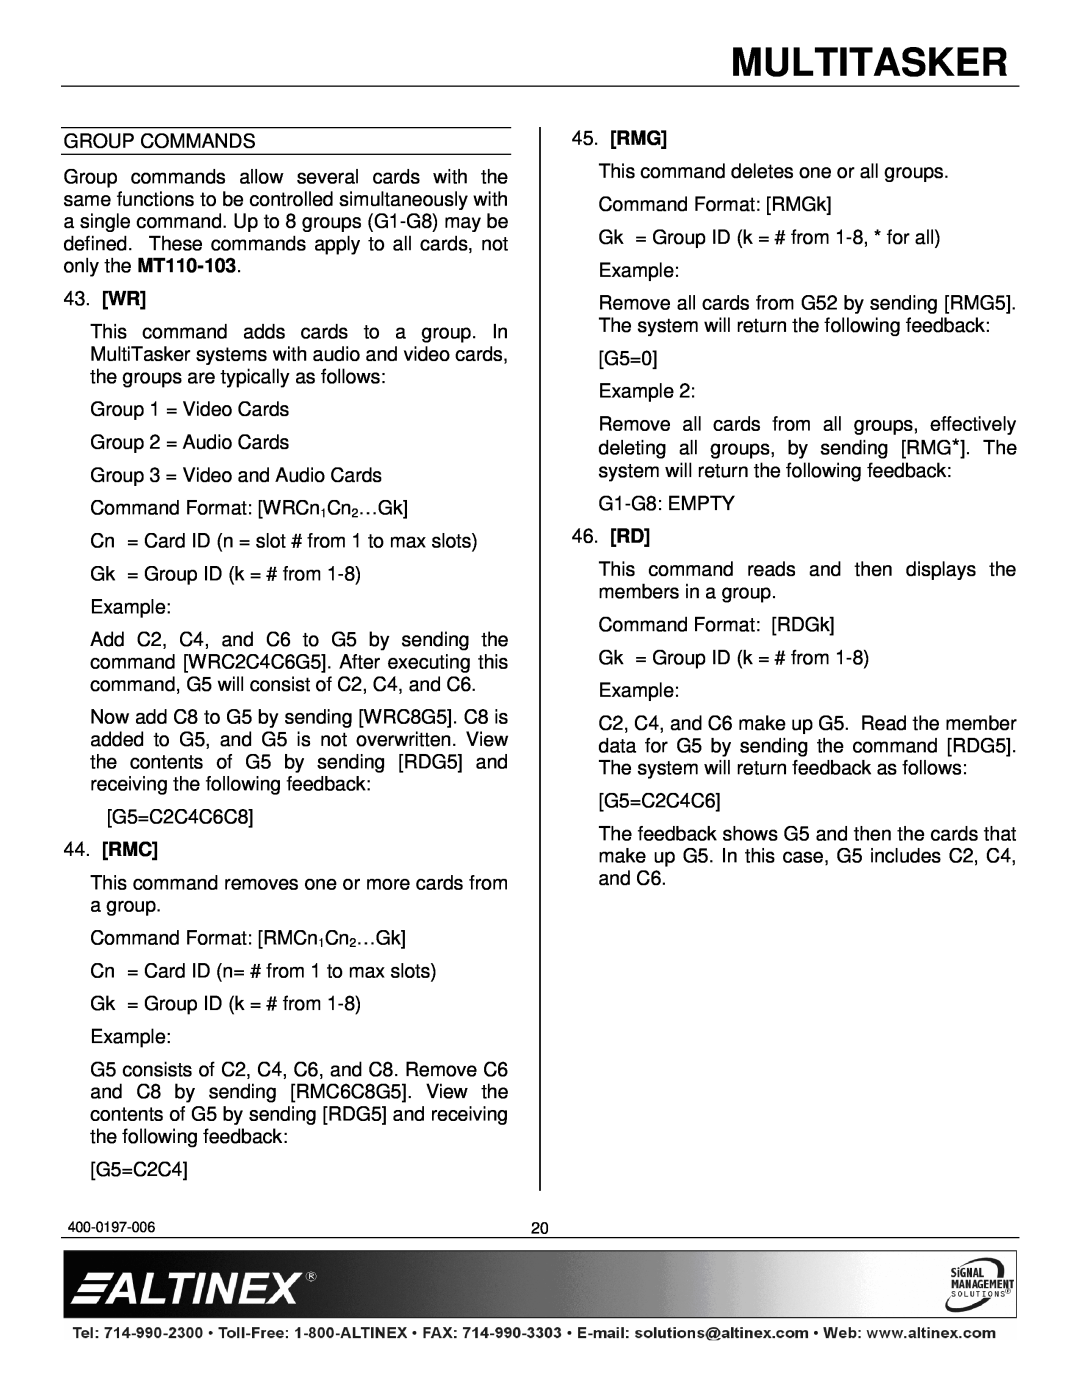 Altinex MT110-103 manual 43. WR, Rmc, Rmg, 46. RD, Multitasker 